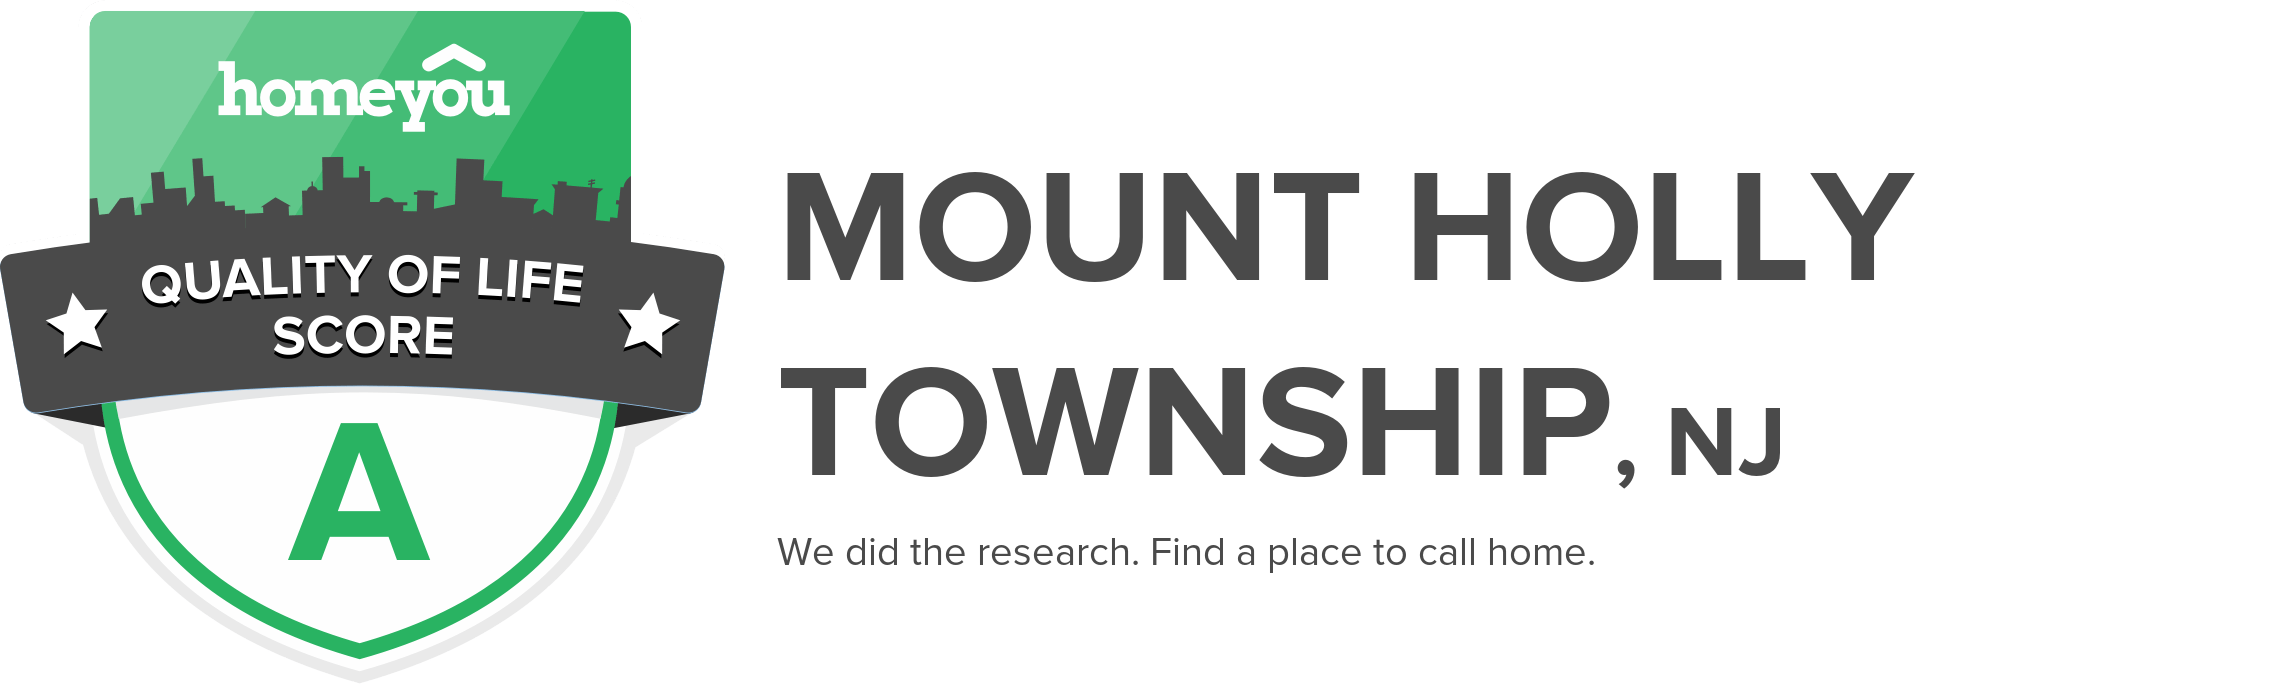 Mount Holly Township, NJ